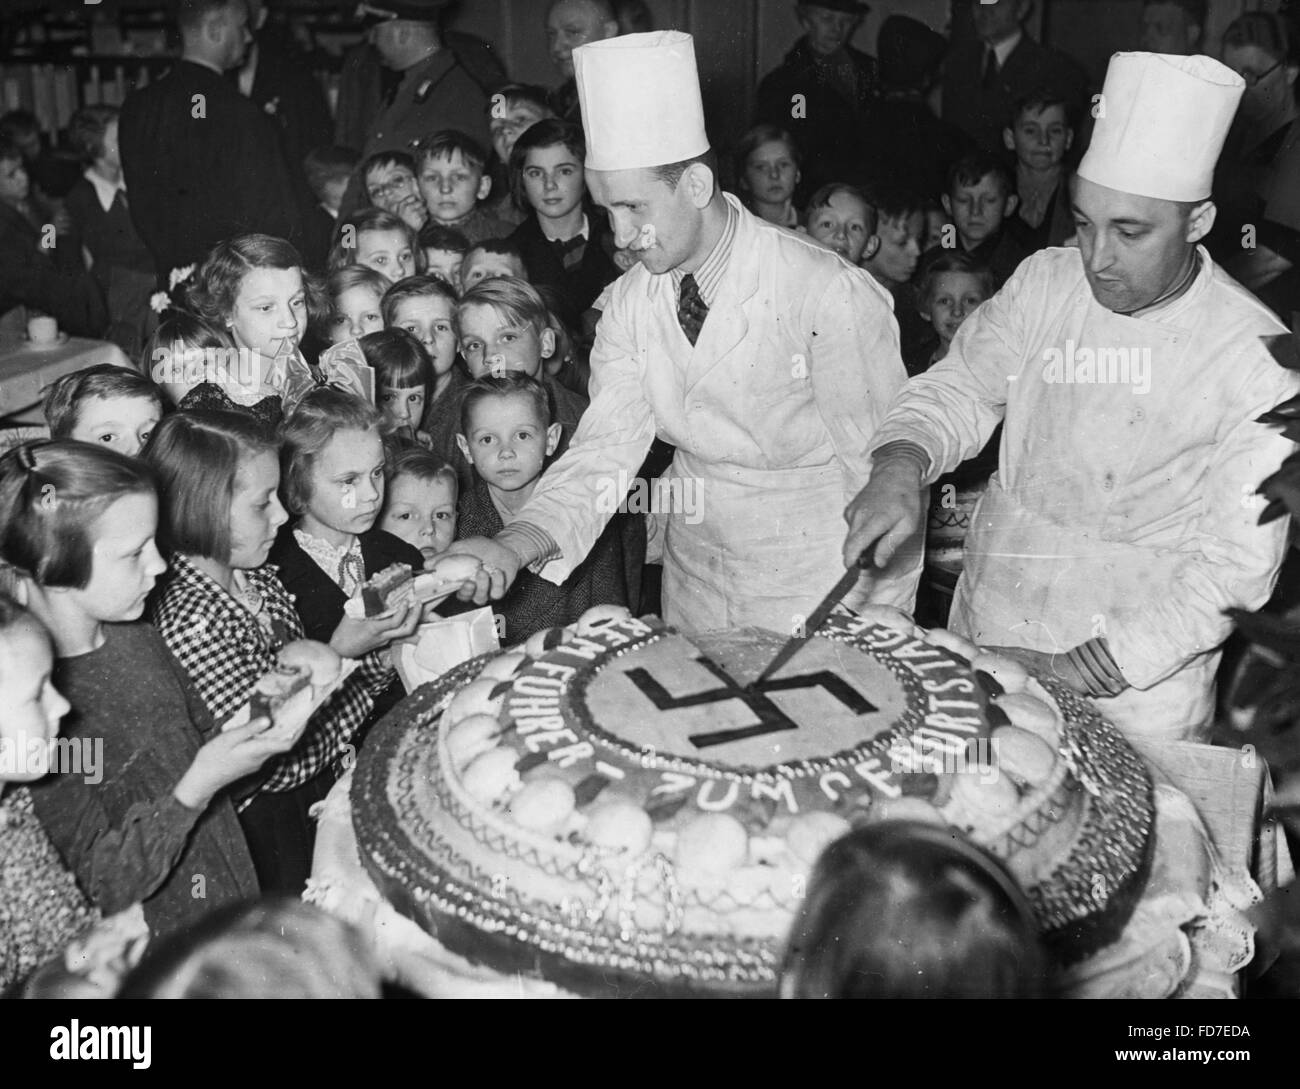 the-birthday-cake-of-adolf-hitler-is-shared-with-children1939-FD7EDA.jpg